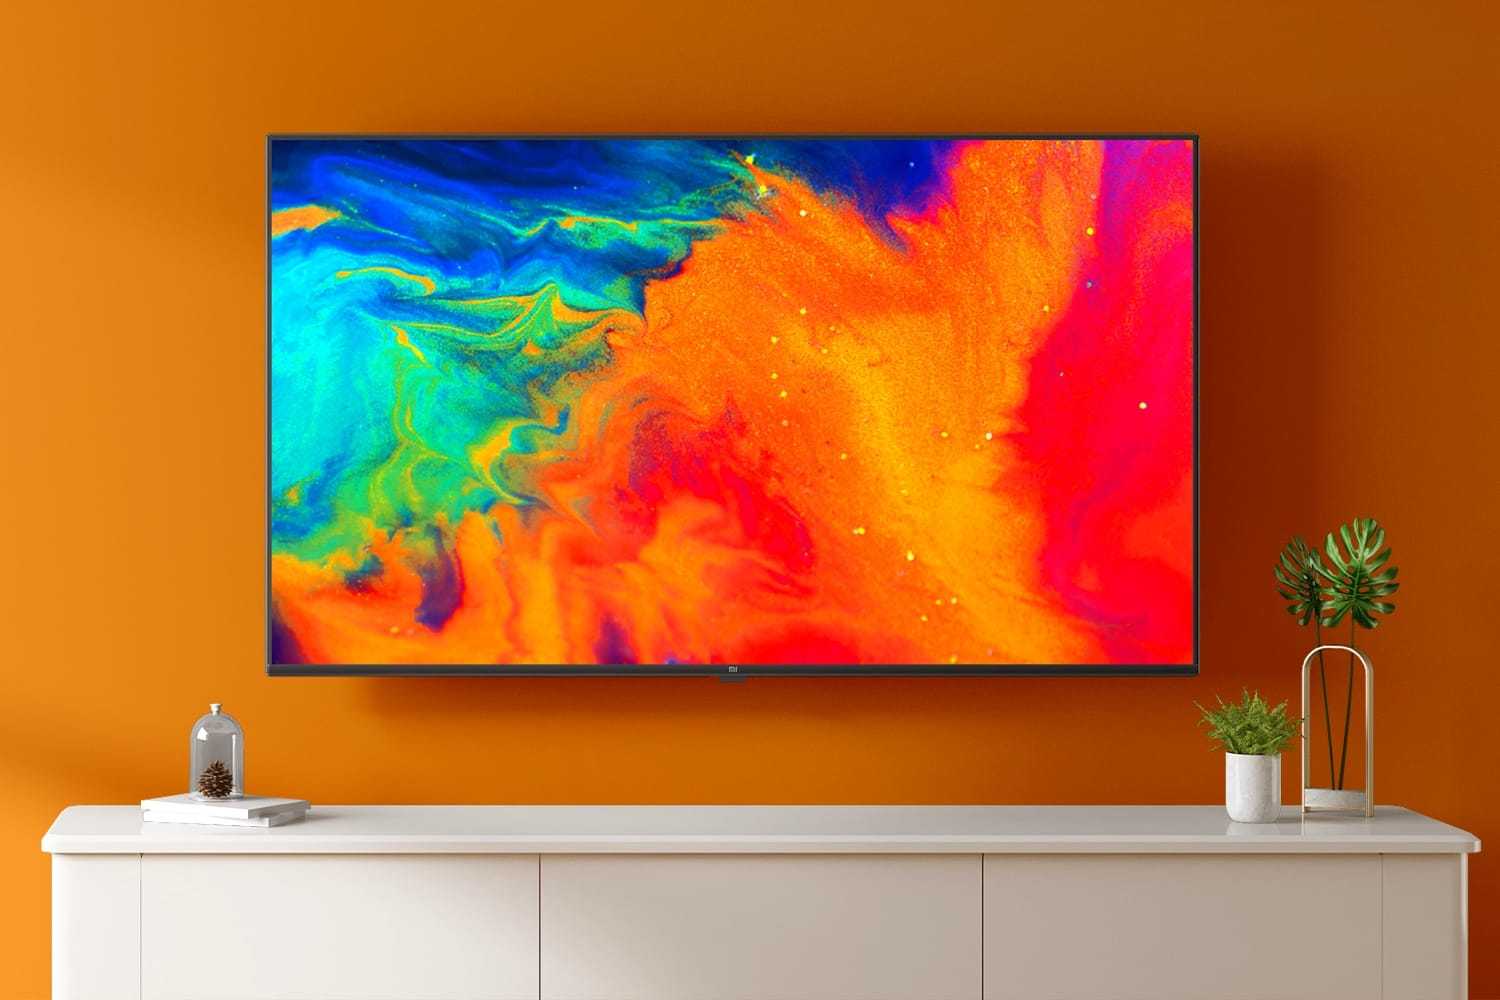 Телевизоры Xiaomi стали №1 по популярности